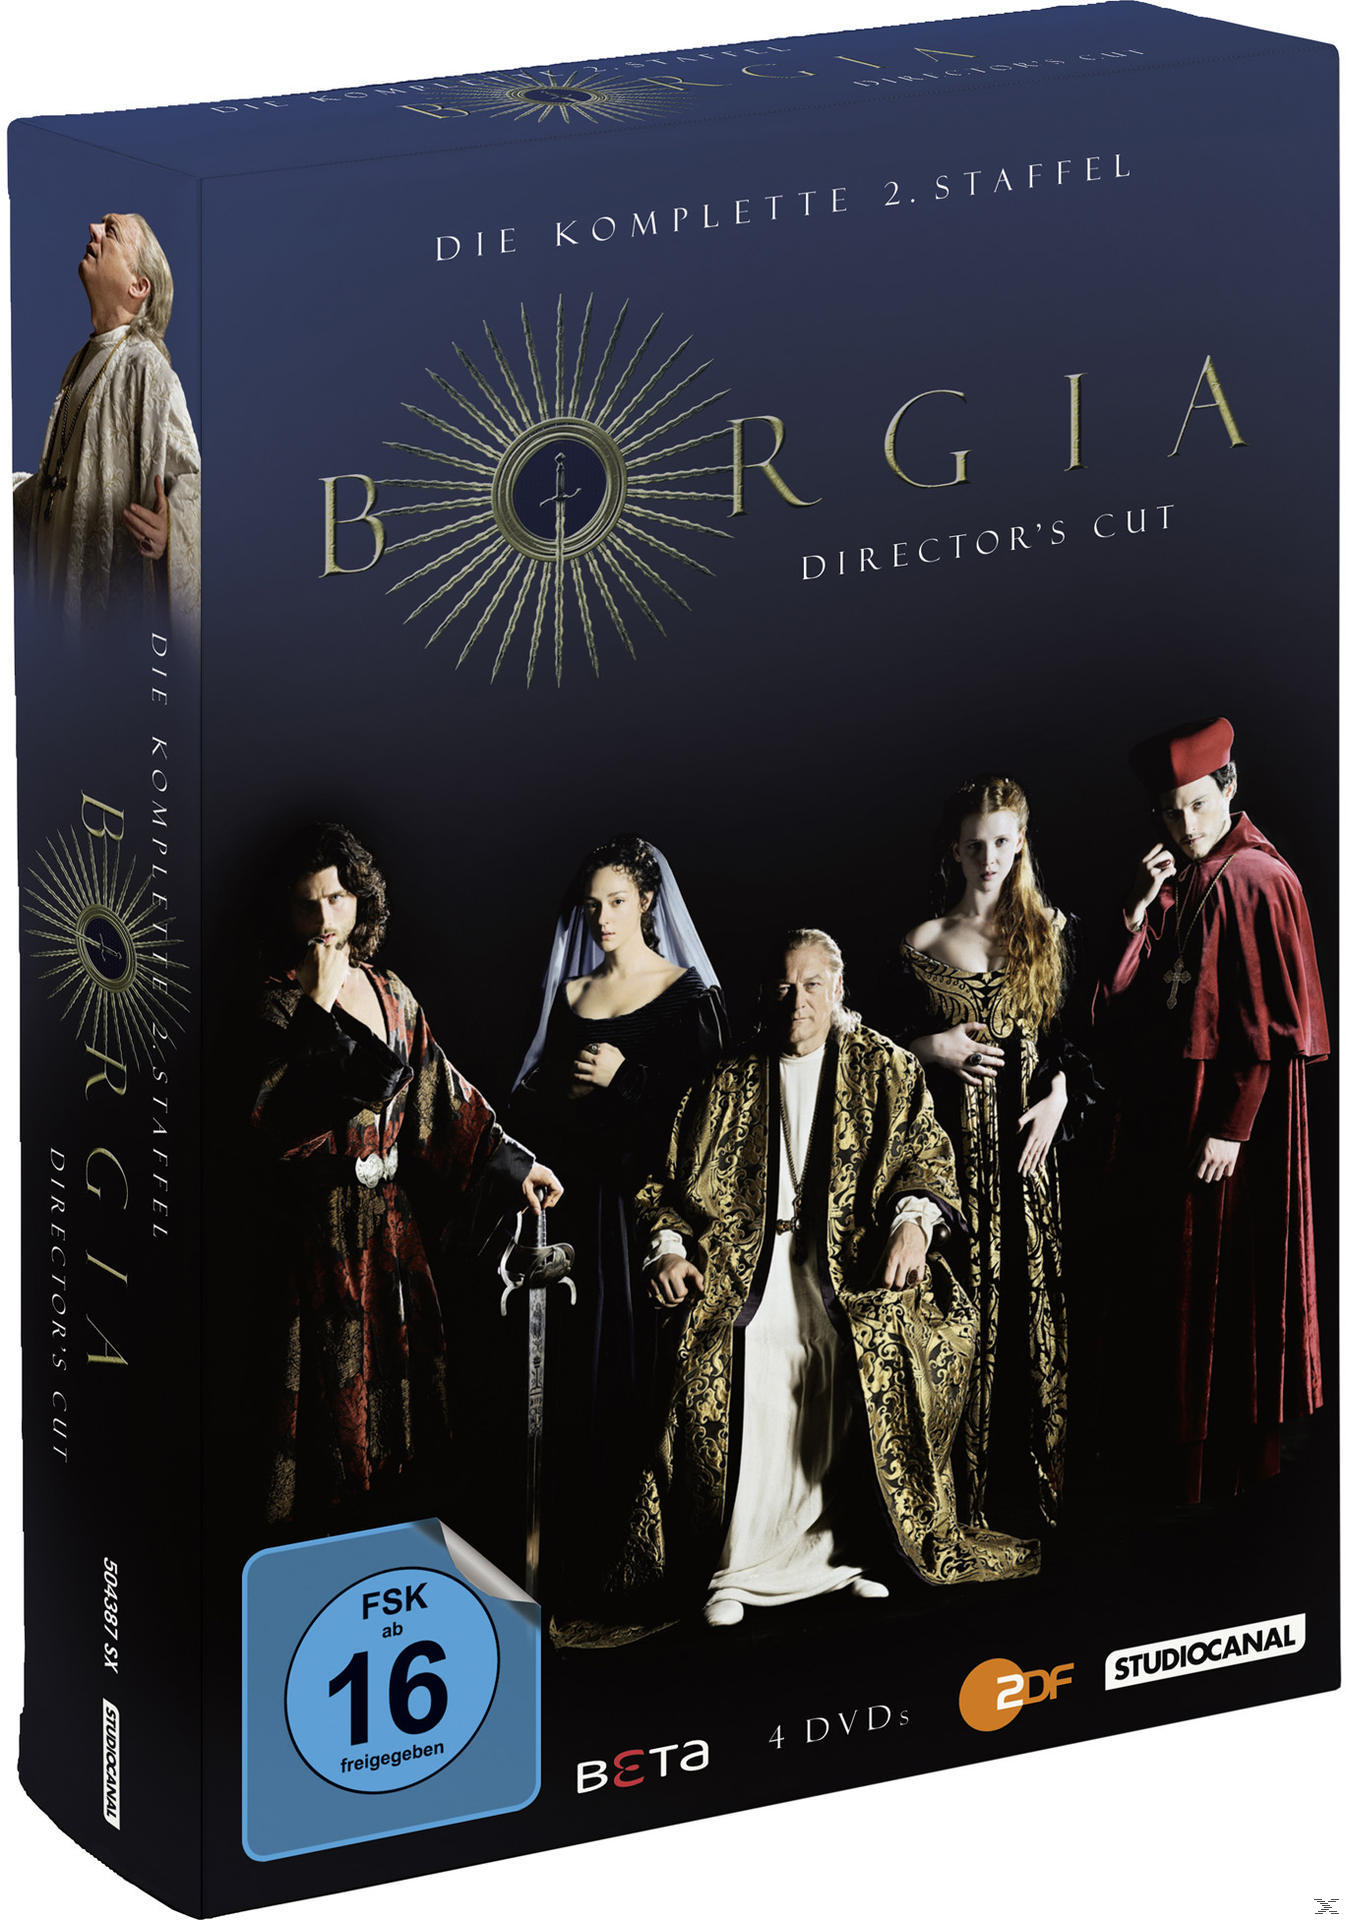 (Director’s Borgia - DVD Cut) 2 Staffel